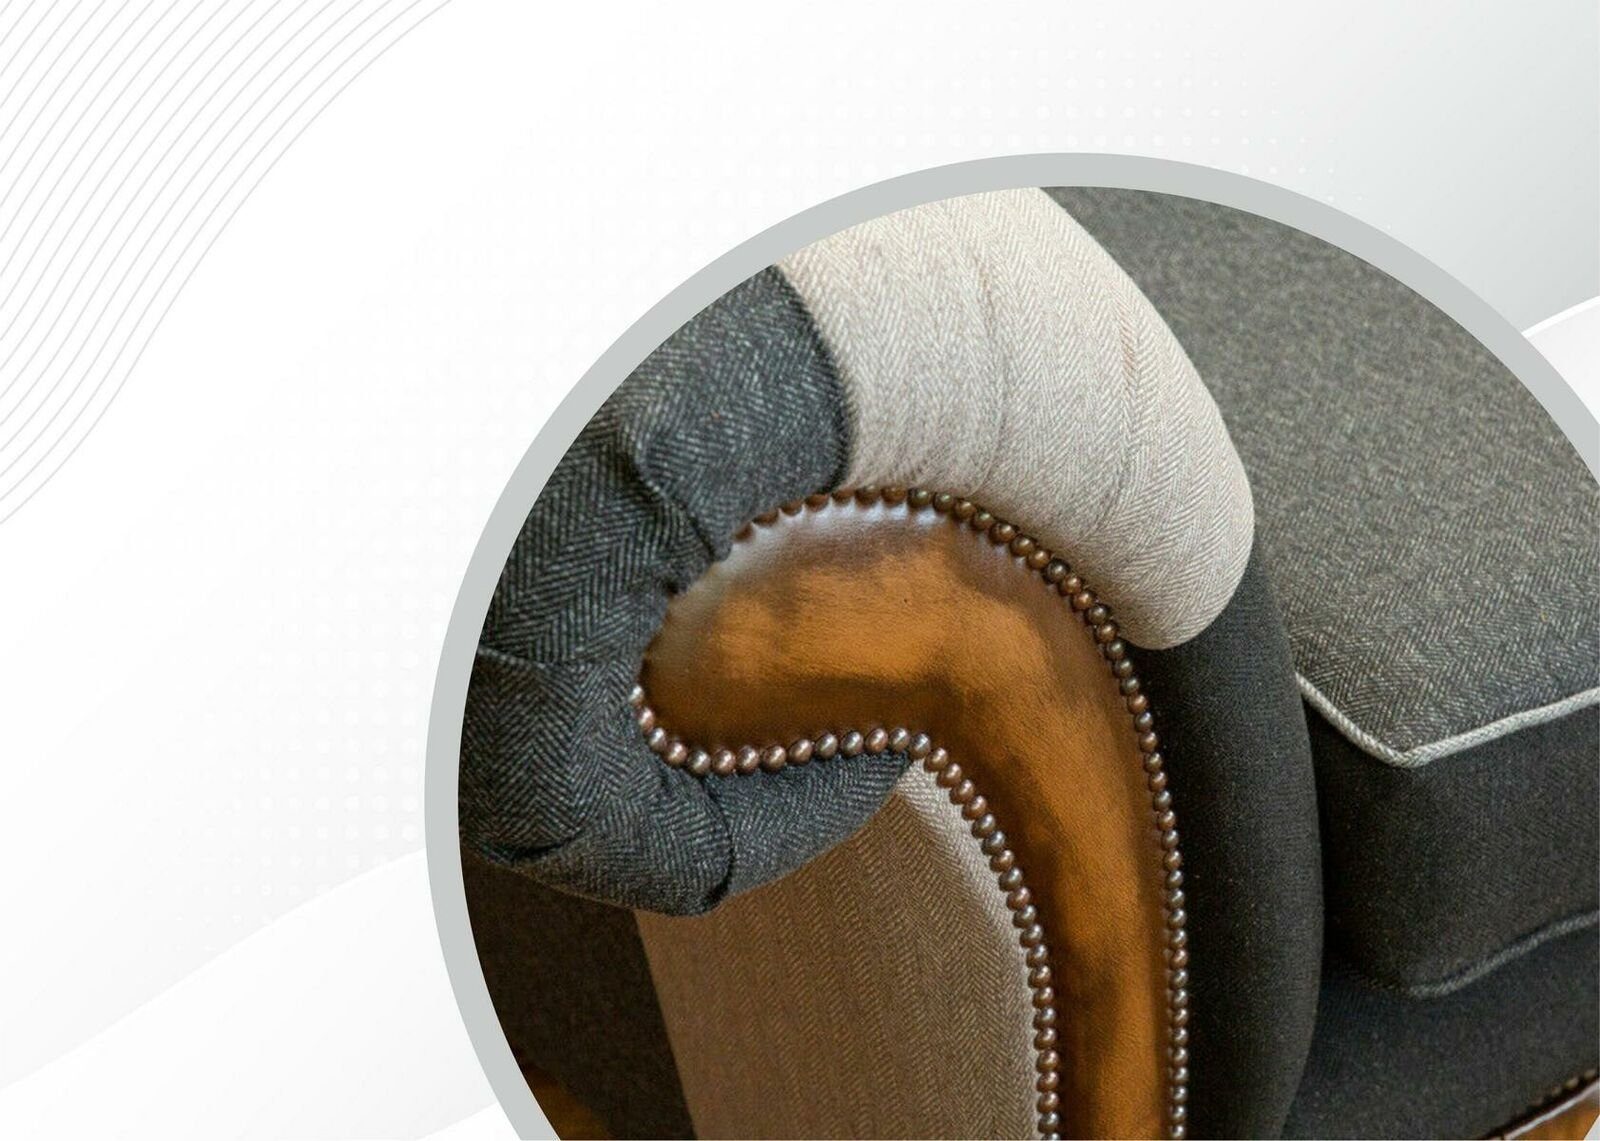 3-Sitzer Europe Made Chesterfield Chesterfield-Sofa Couch Design Luxus in Moderne Neu, JVmoebel bunter